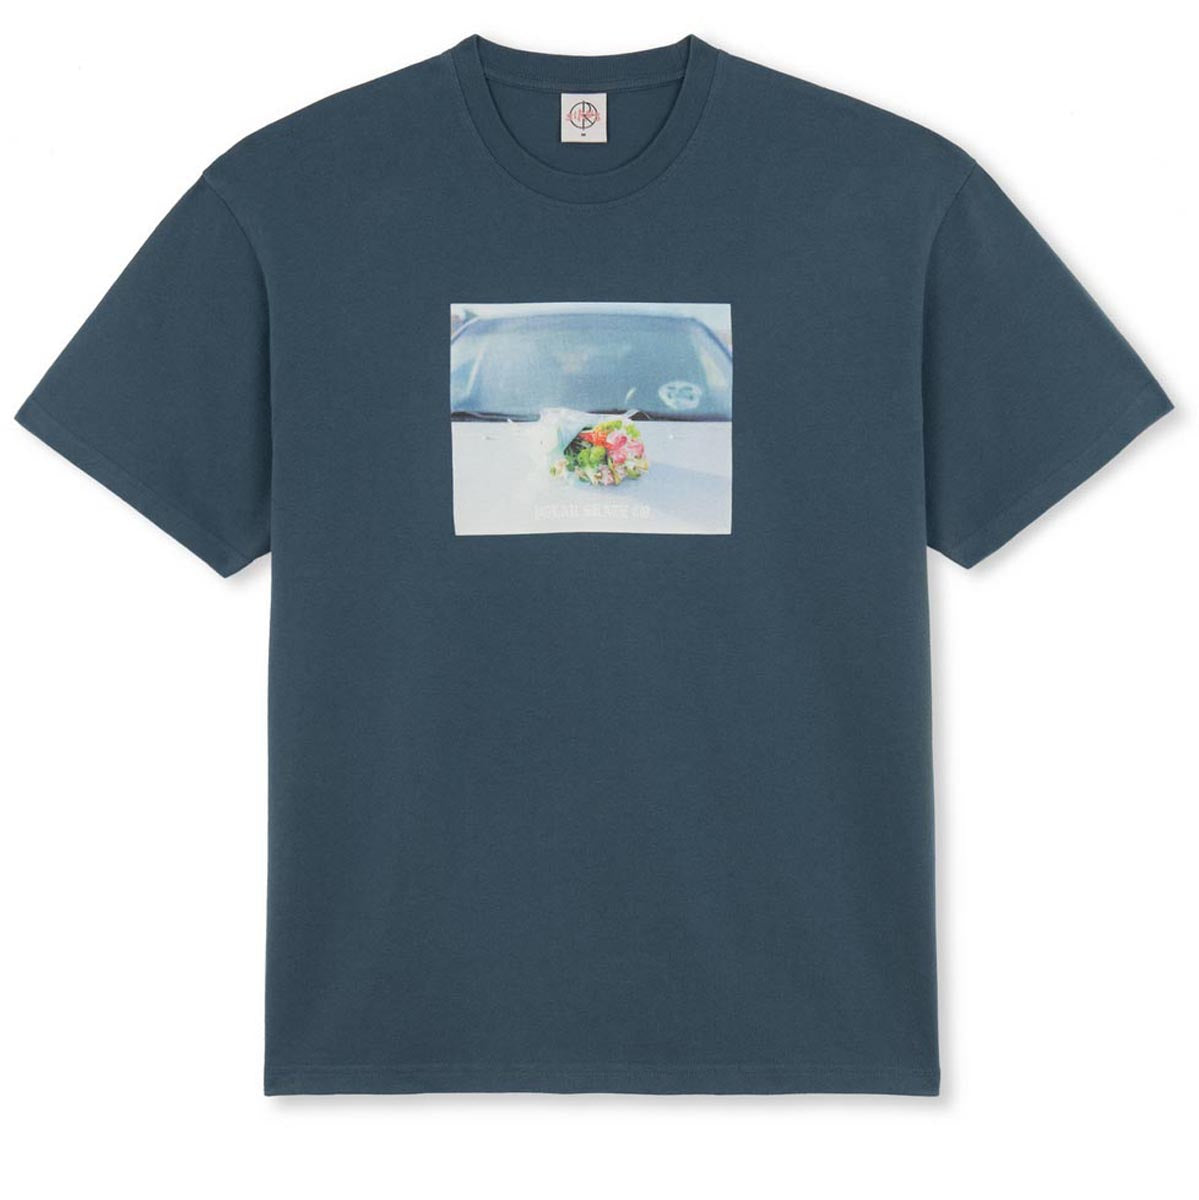 Polar Dead Flowers T-Shirt - Grey Blue image 1